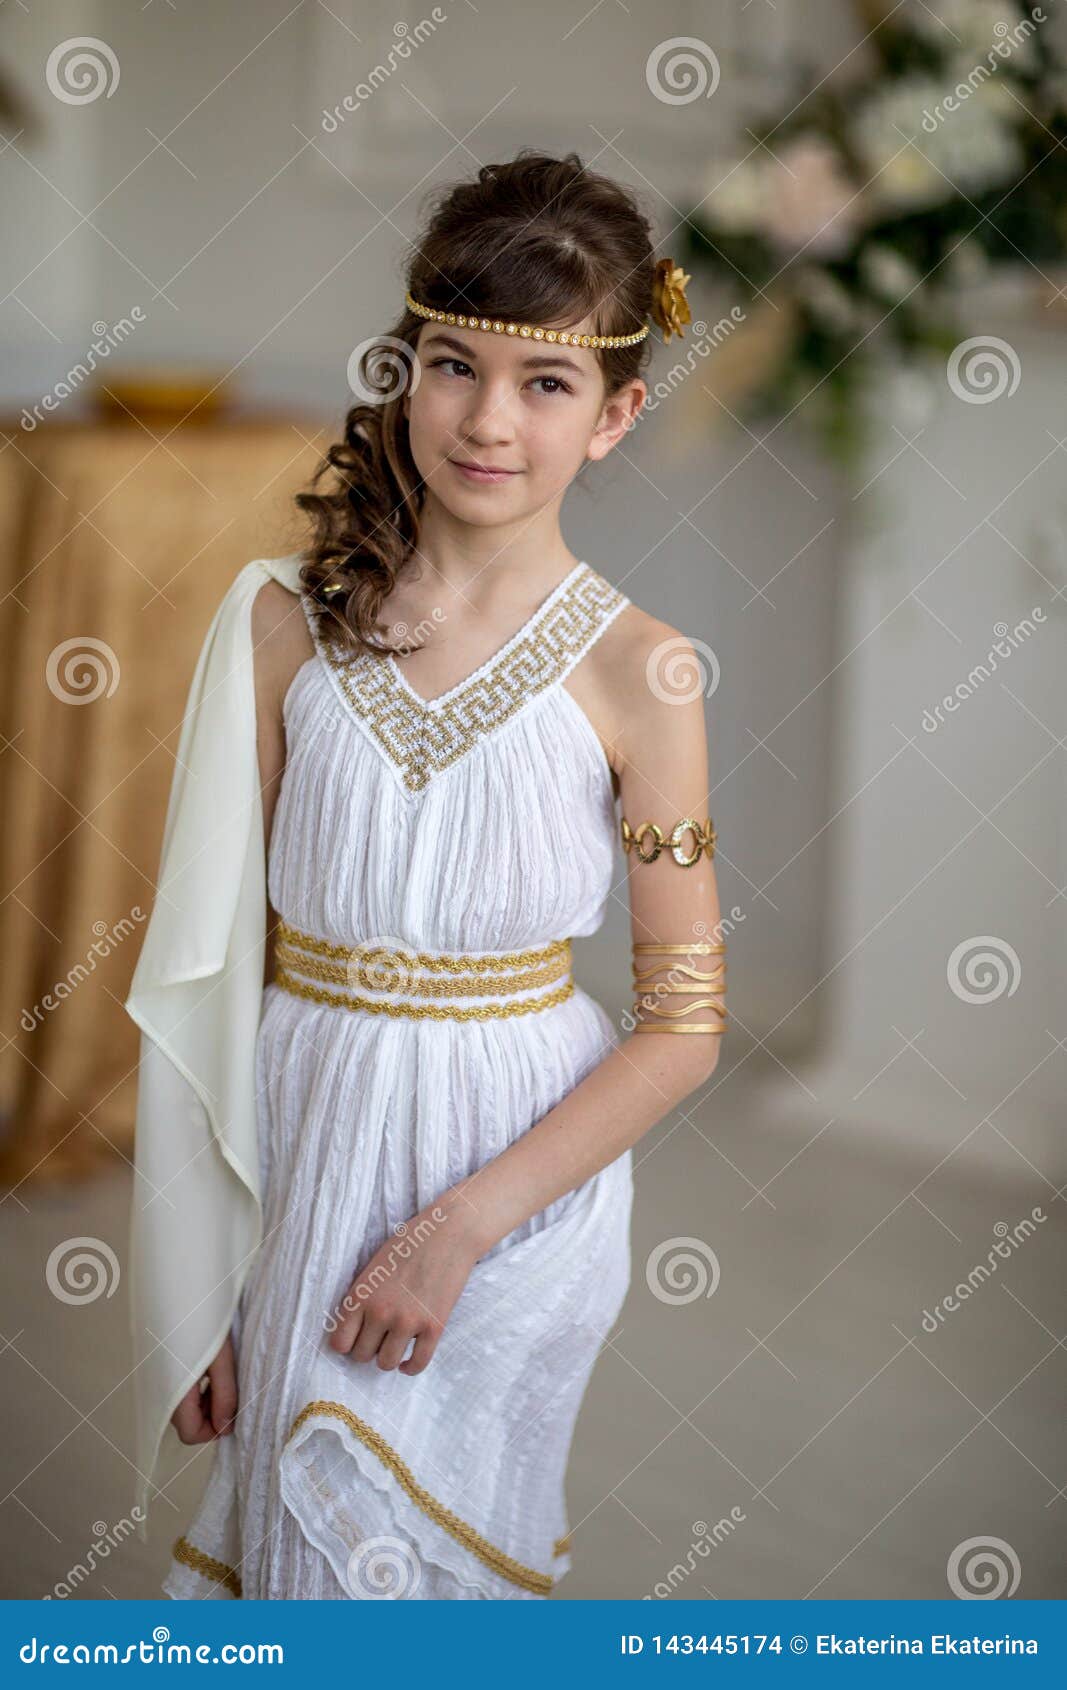 Beautiful Girl in Greek Dress Stock Photo - Image of hands, girls: 143445174